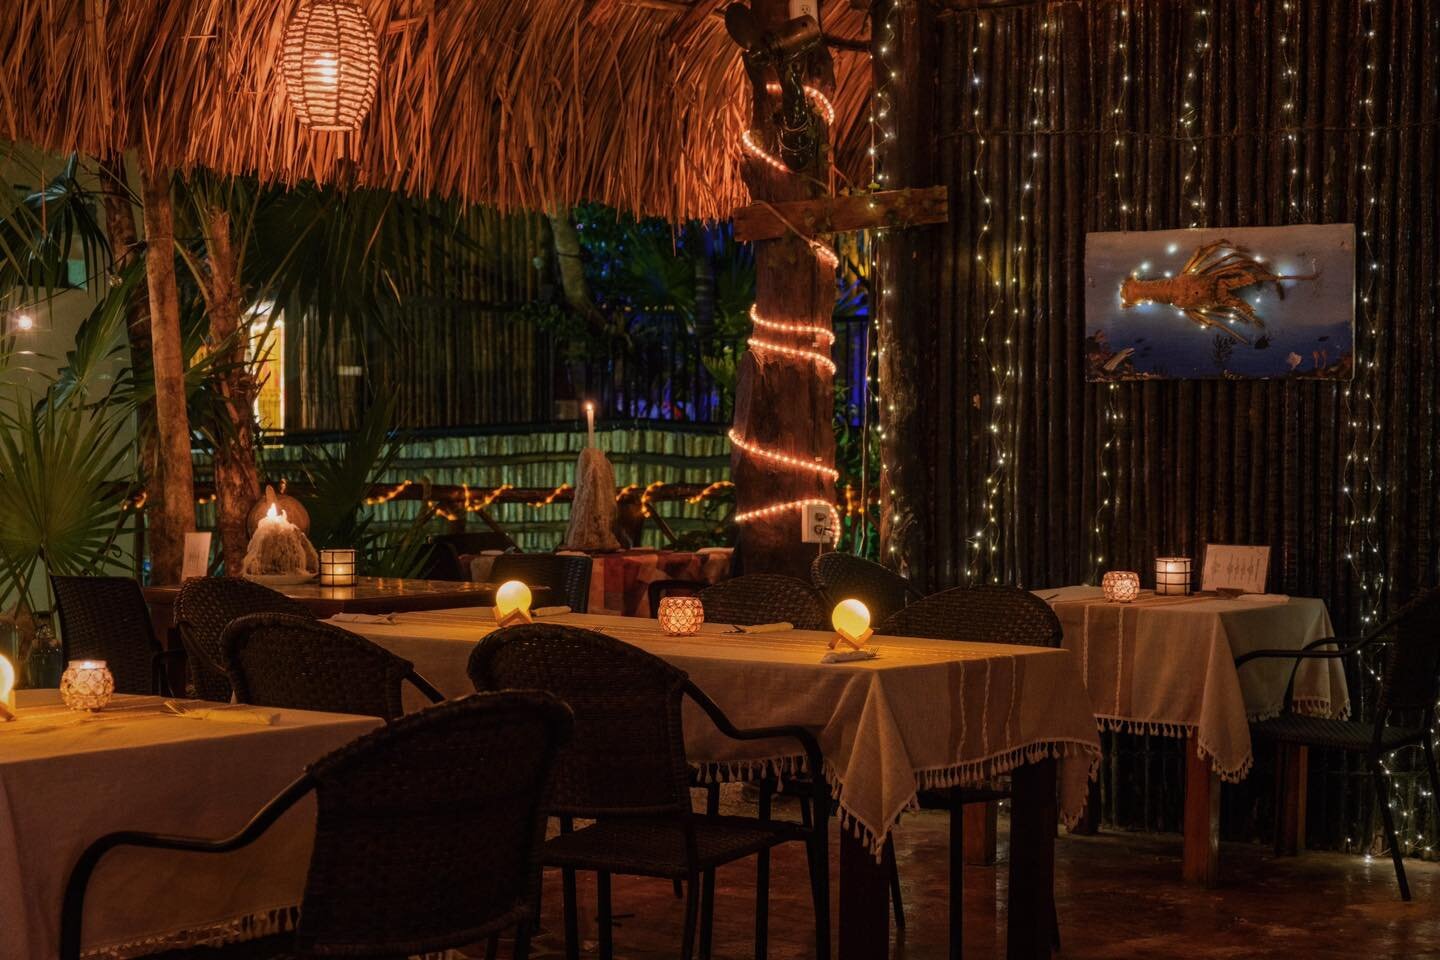 Enjoy a perfect evening at The Original Lobster House 🦞
@theoriginallobsterhouse 

#islacozumel #cozumelmexico #lobsterlover #lobstertails #cozumelisland #seafoodrestaurant #mexicancaribbean #catchoftheday #travelfoodie #drinklocal #cozumel